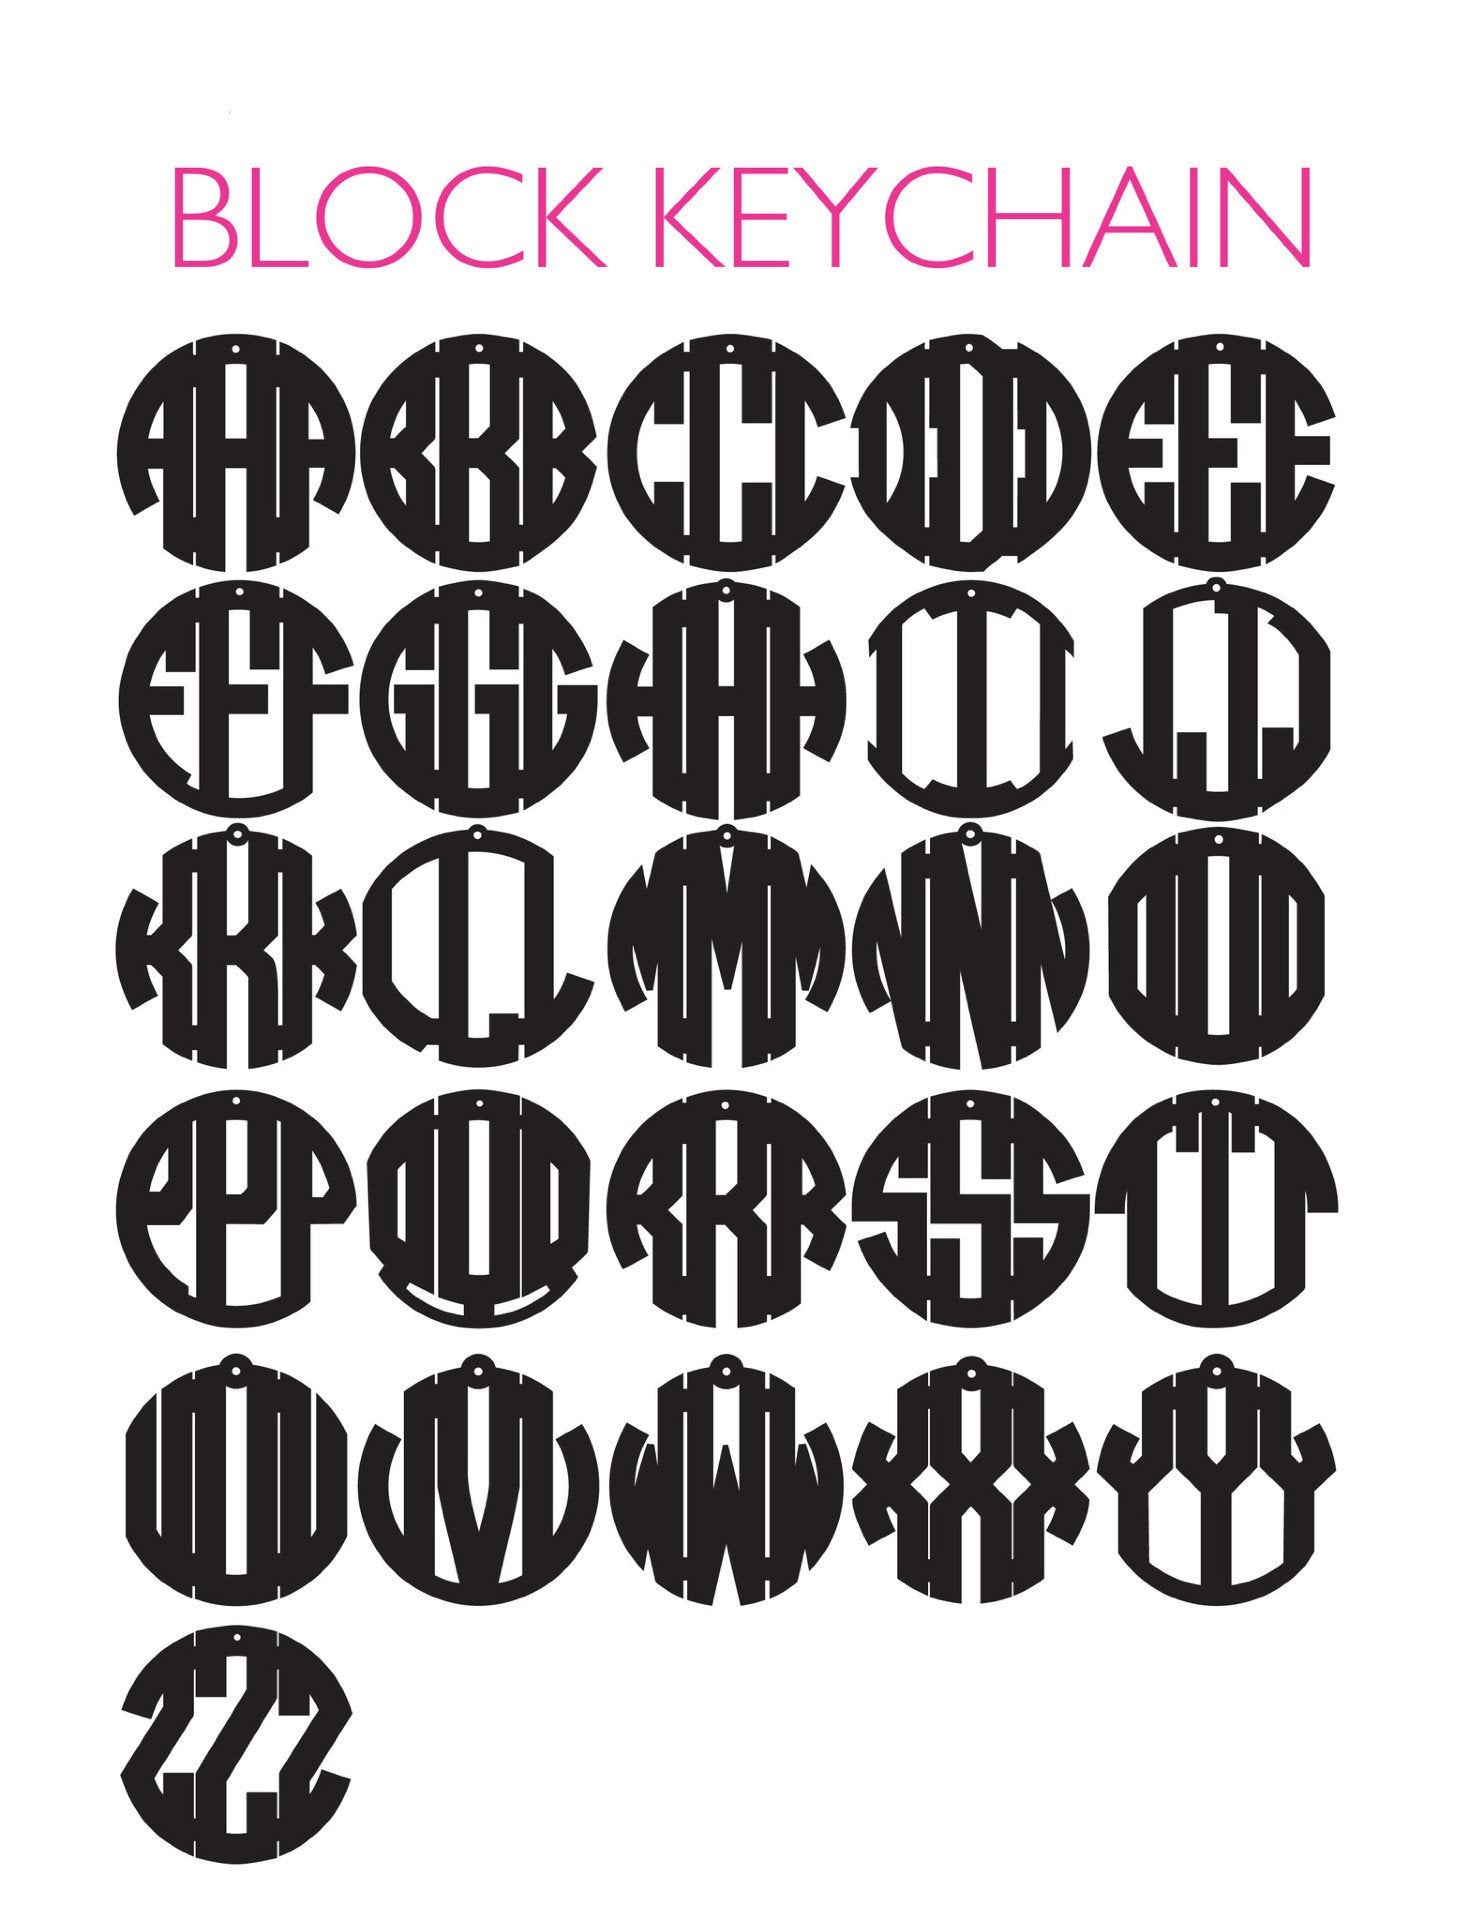 Sample "NBL" Nice Block Keychain